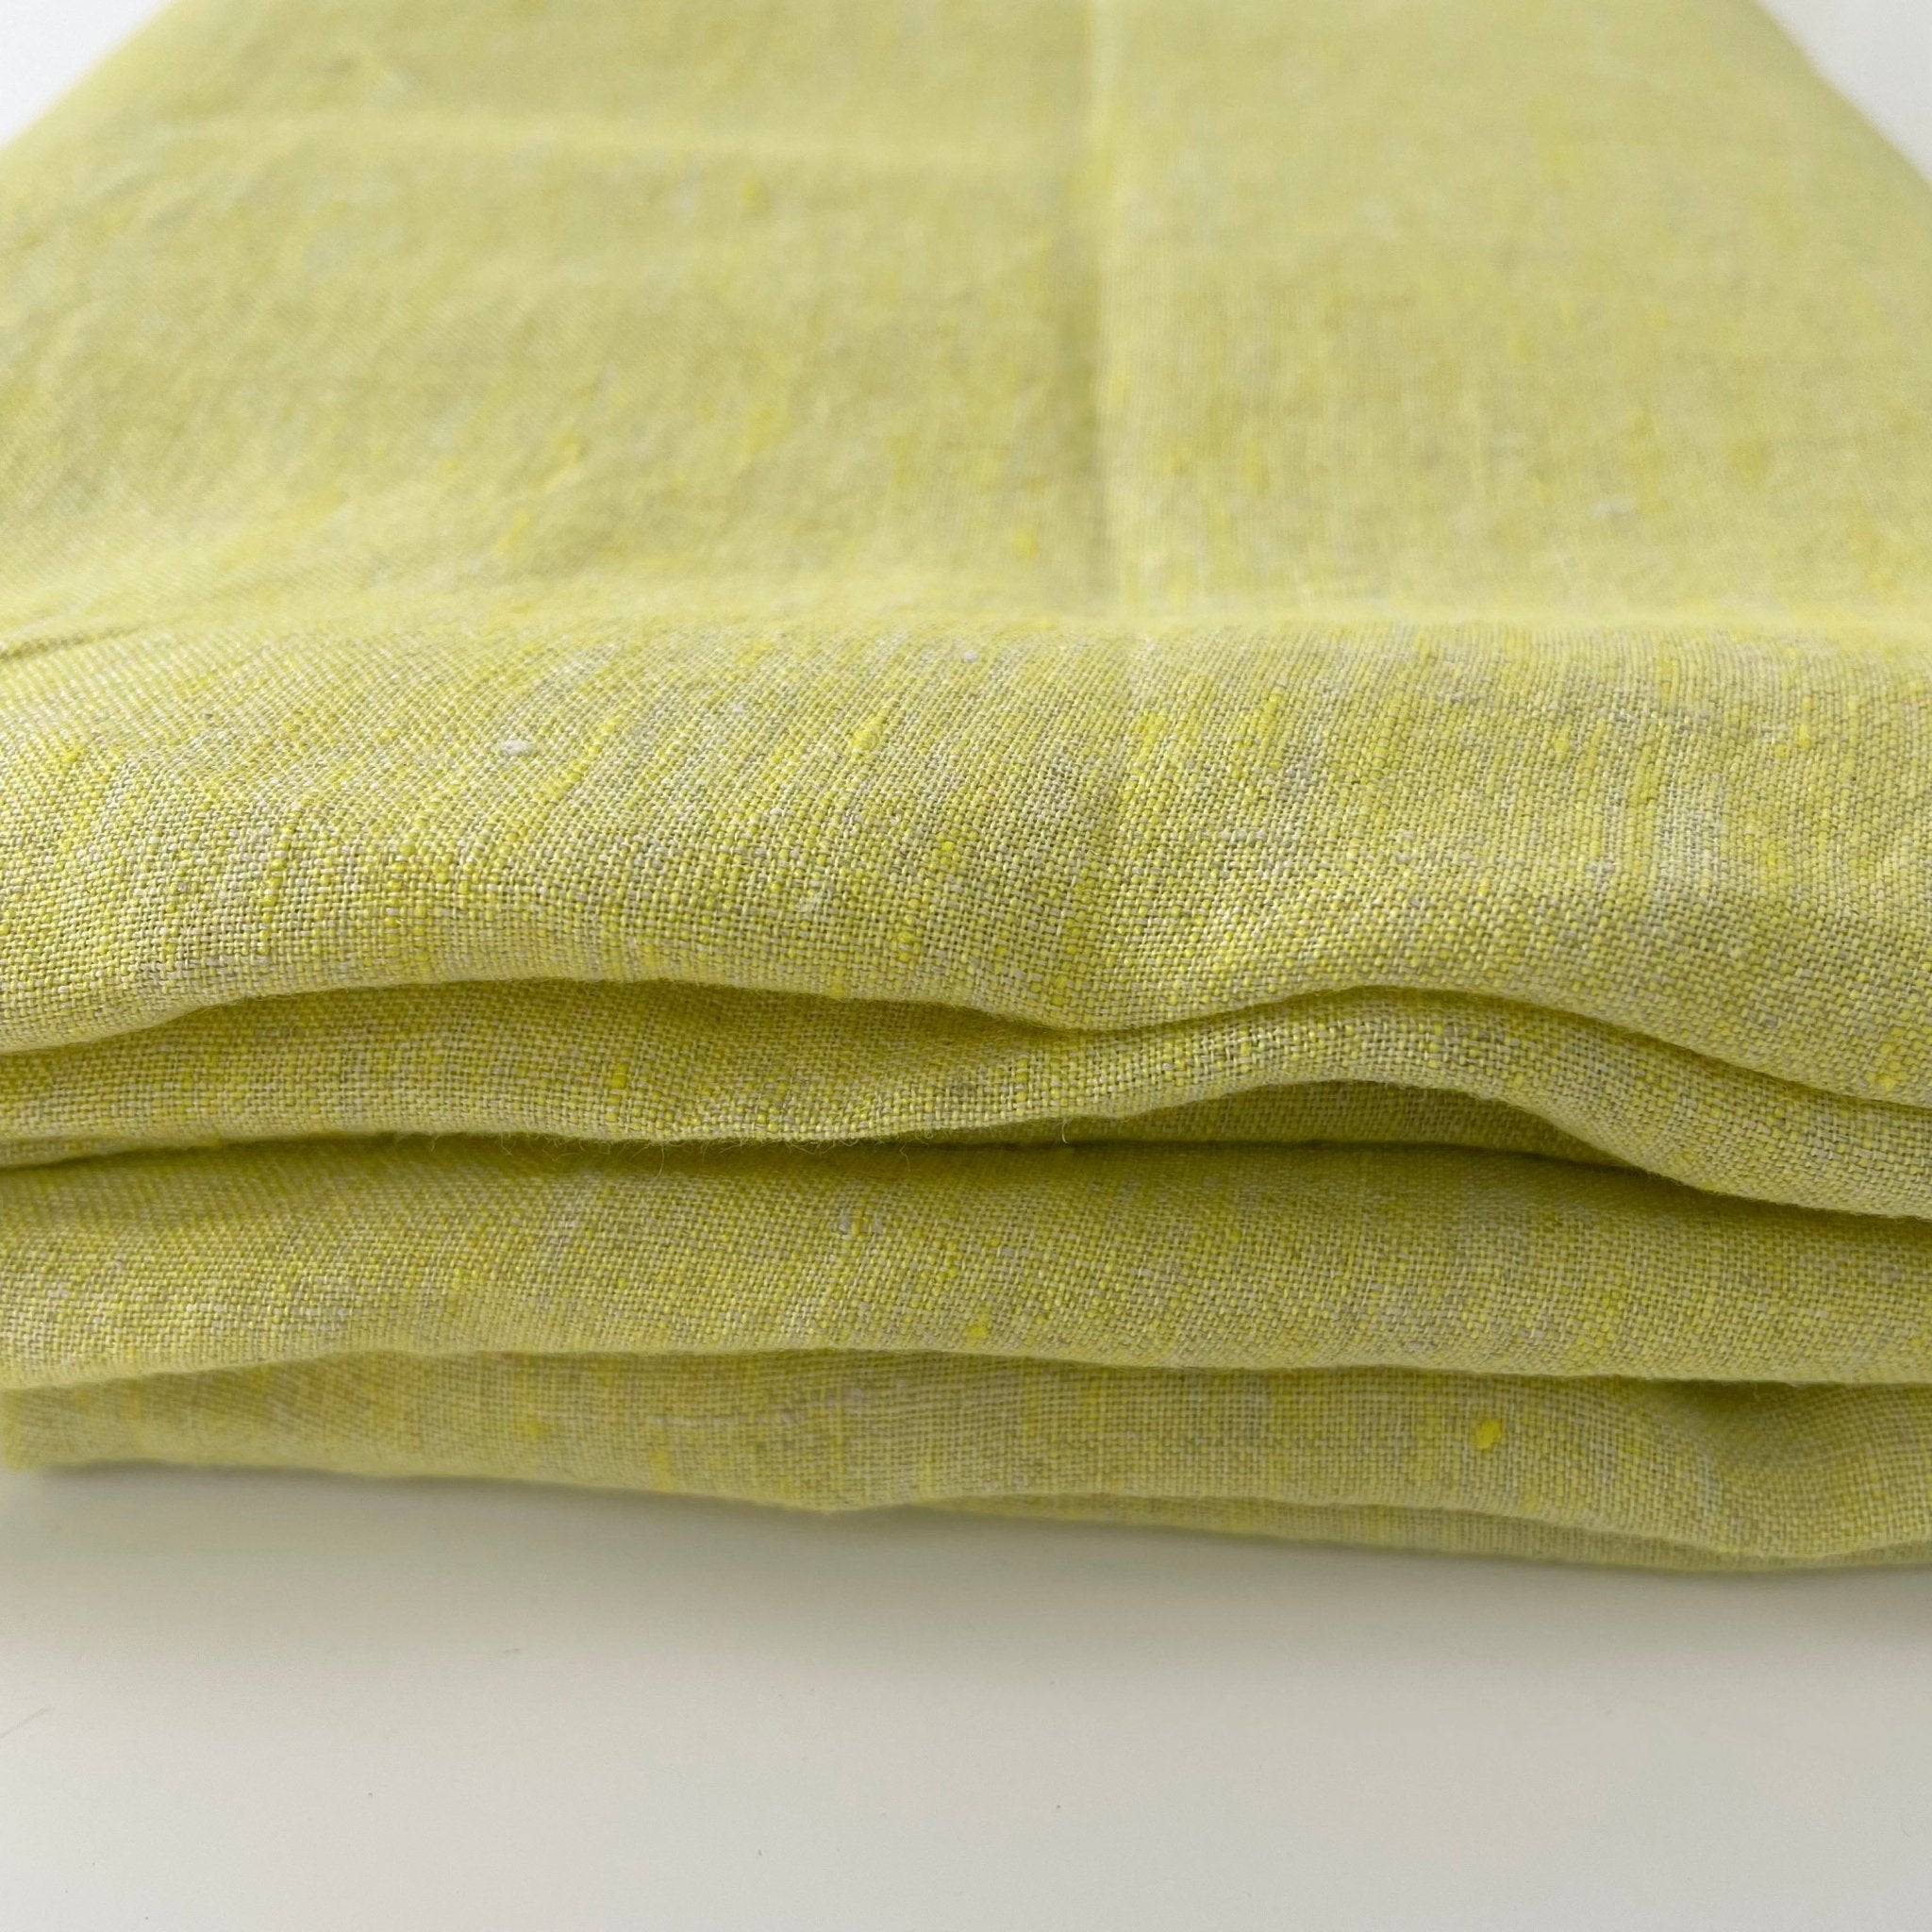 Linen Fabric Light Weight Soft Touch 21S 7365 7366 7260 - The Linen Lab - Yellow